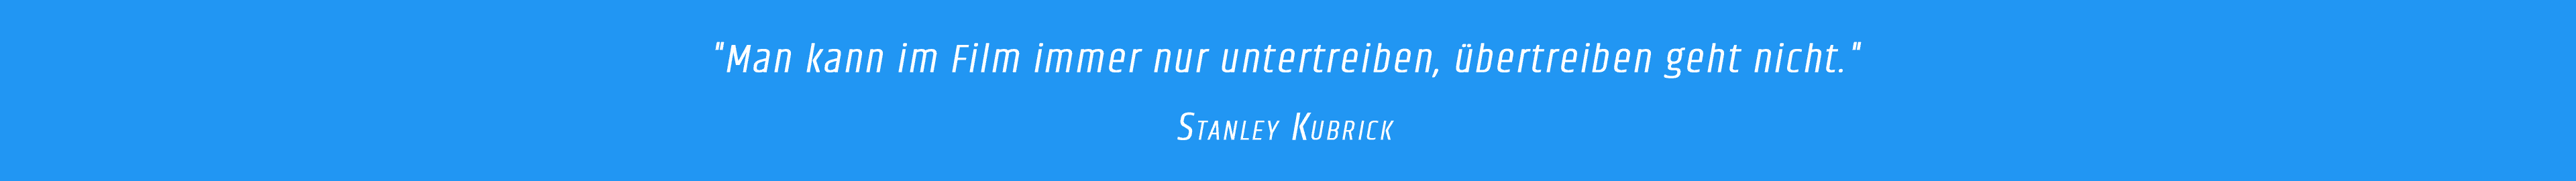 Zitat - Stanley Kubrick